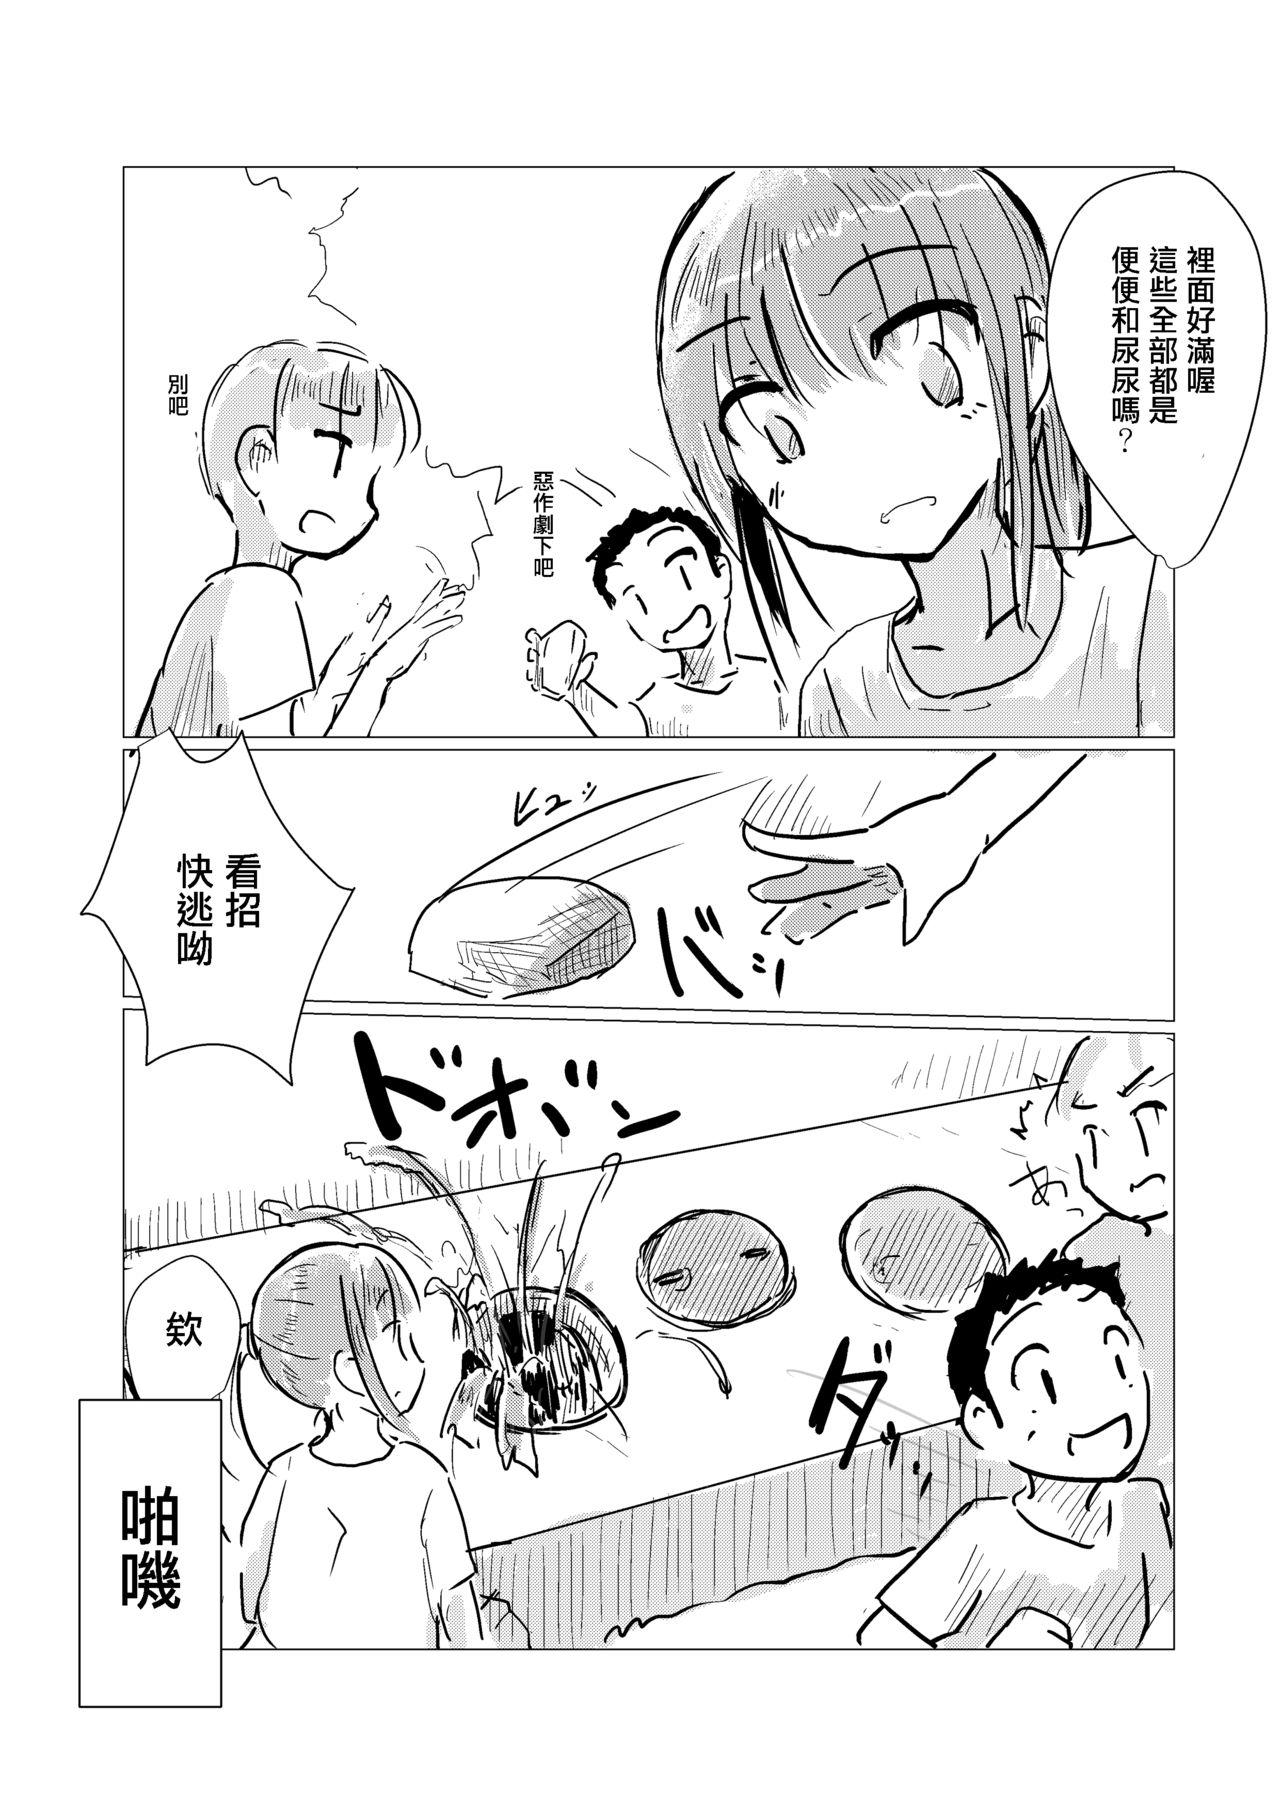 Filth Scat Manga 2